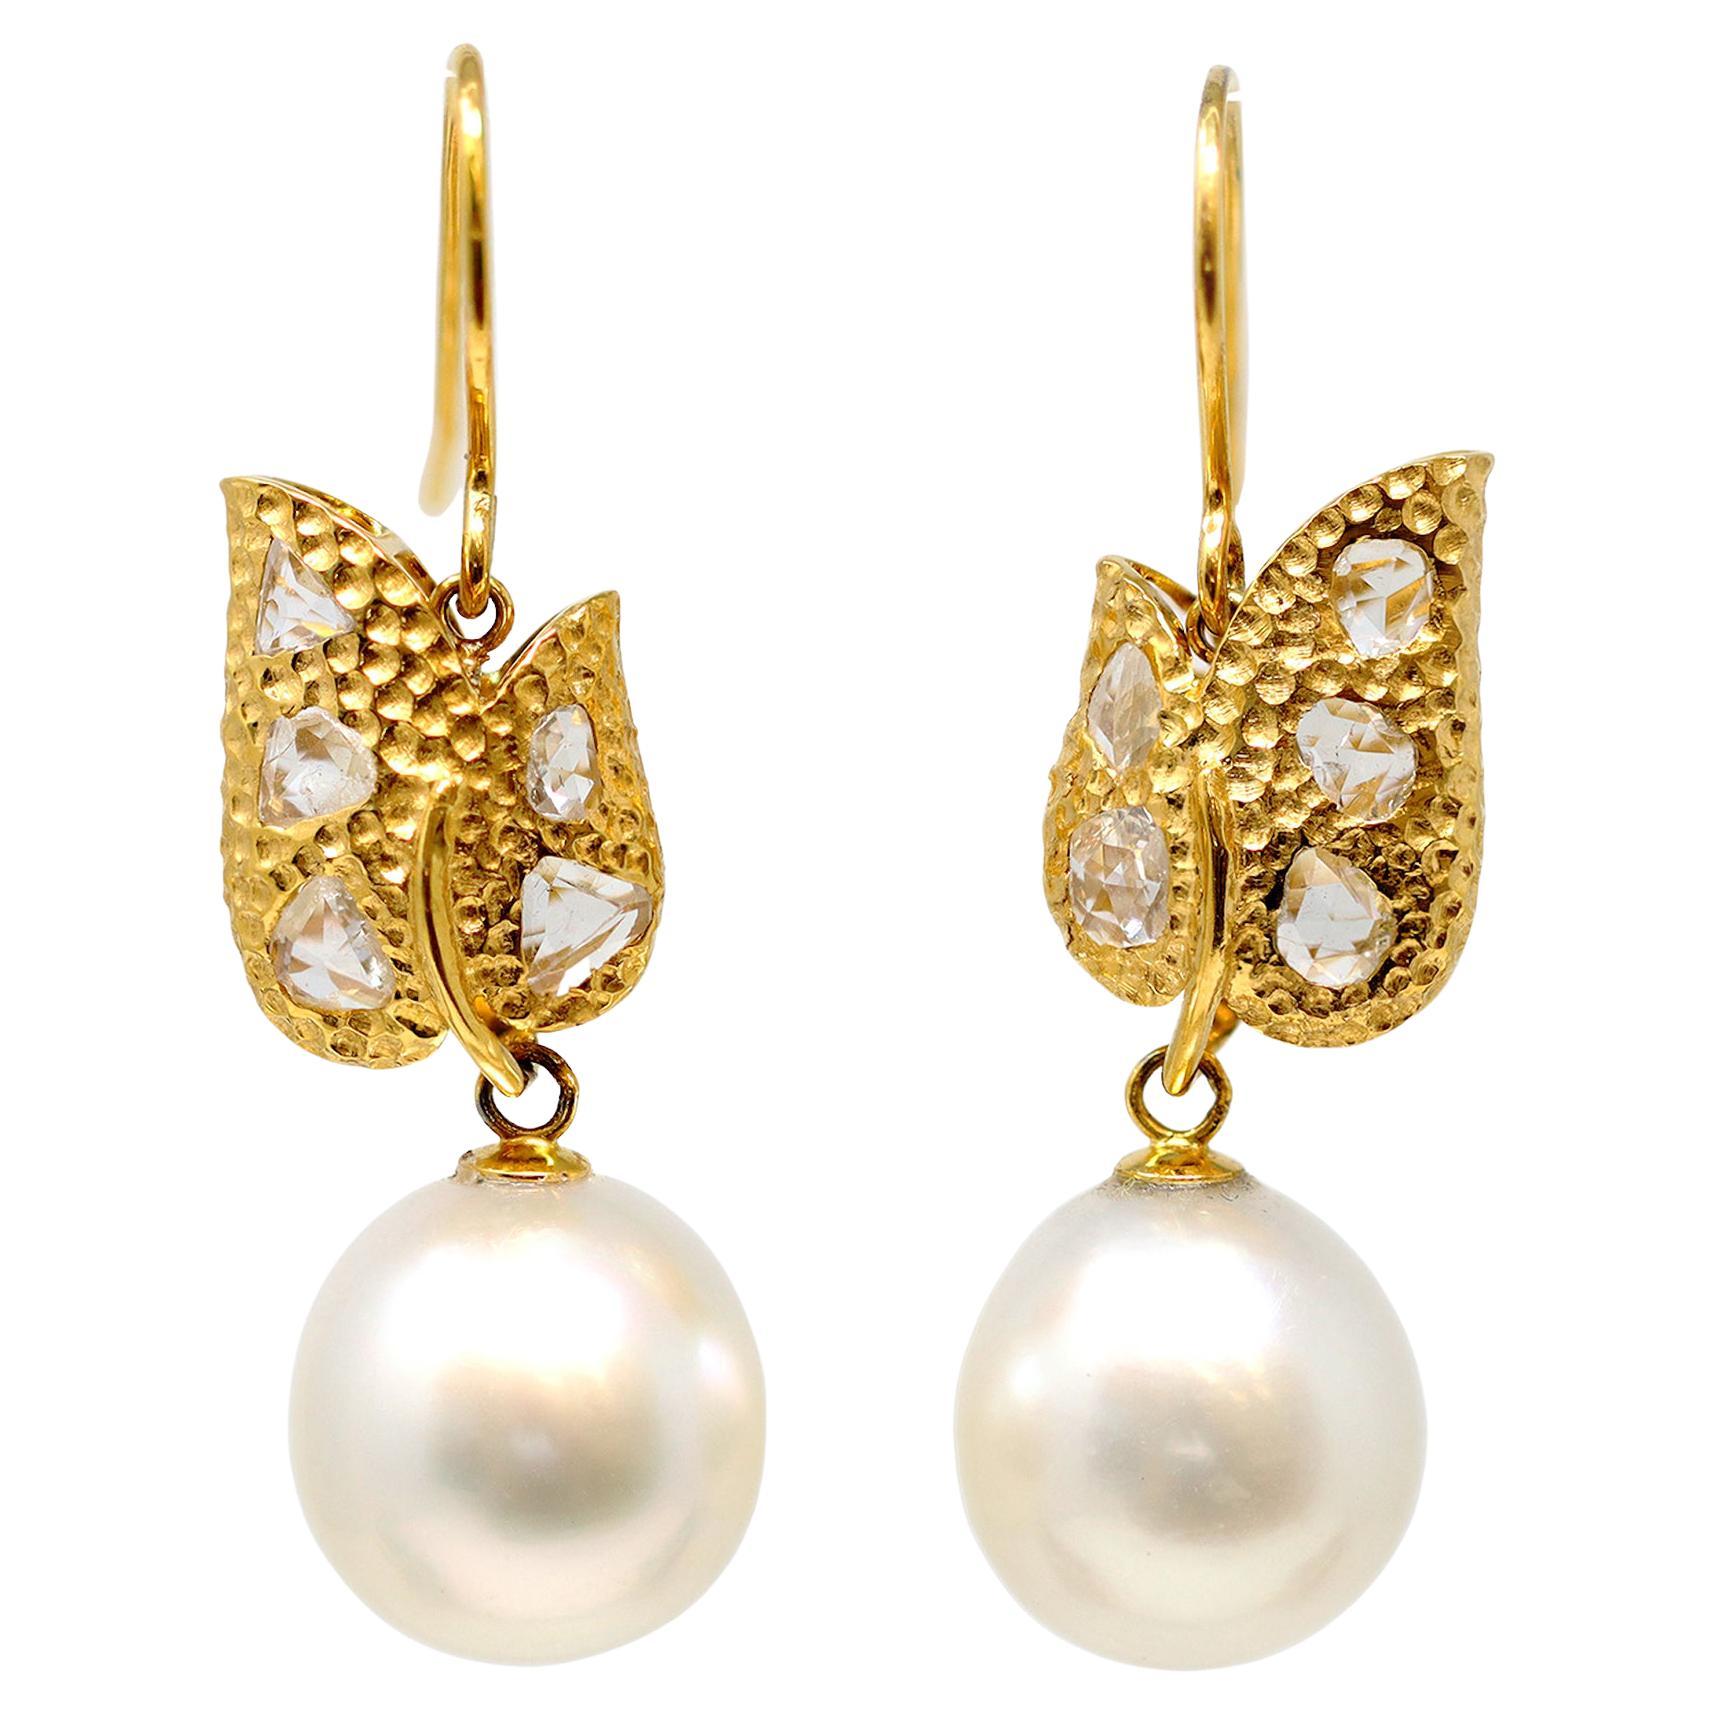 Pair of South Sea Pearl and Rose Cut Diamond Hook Earrings in 18k For Sale